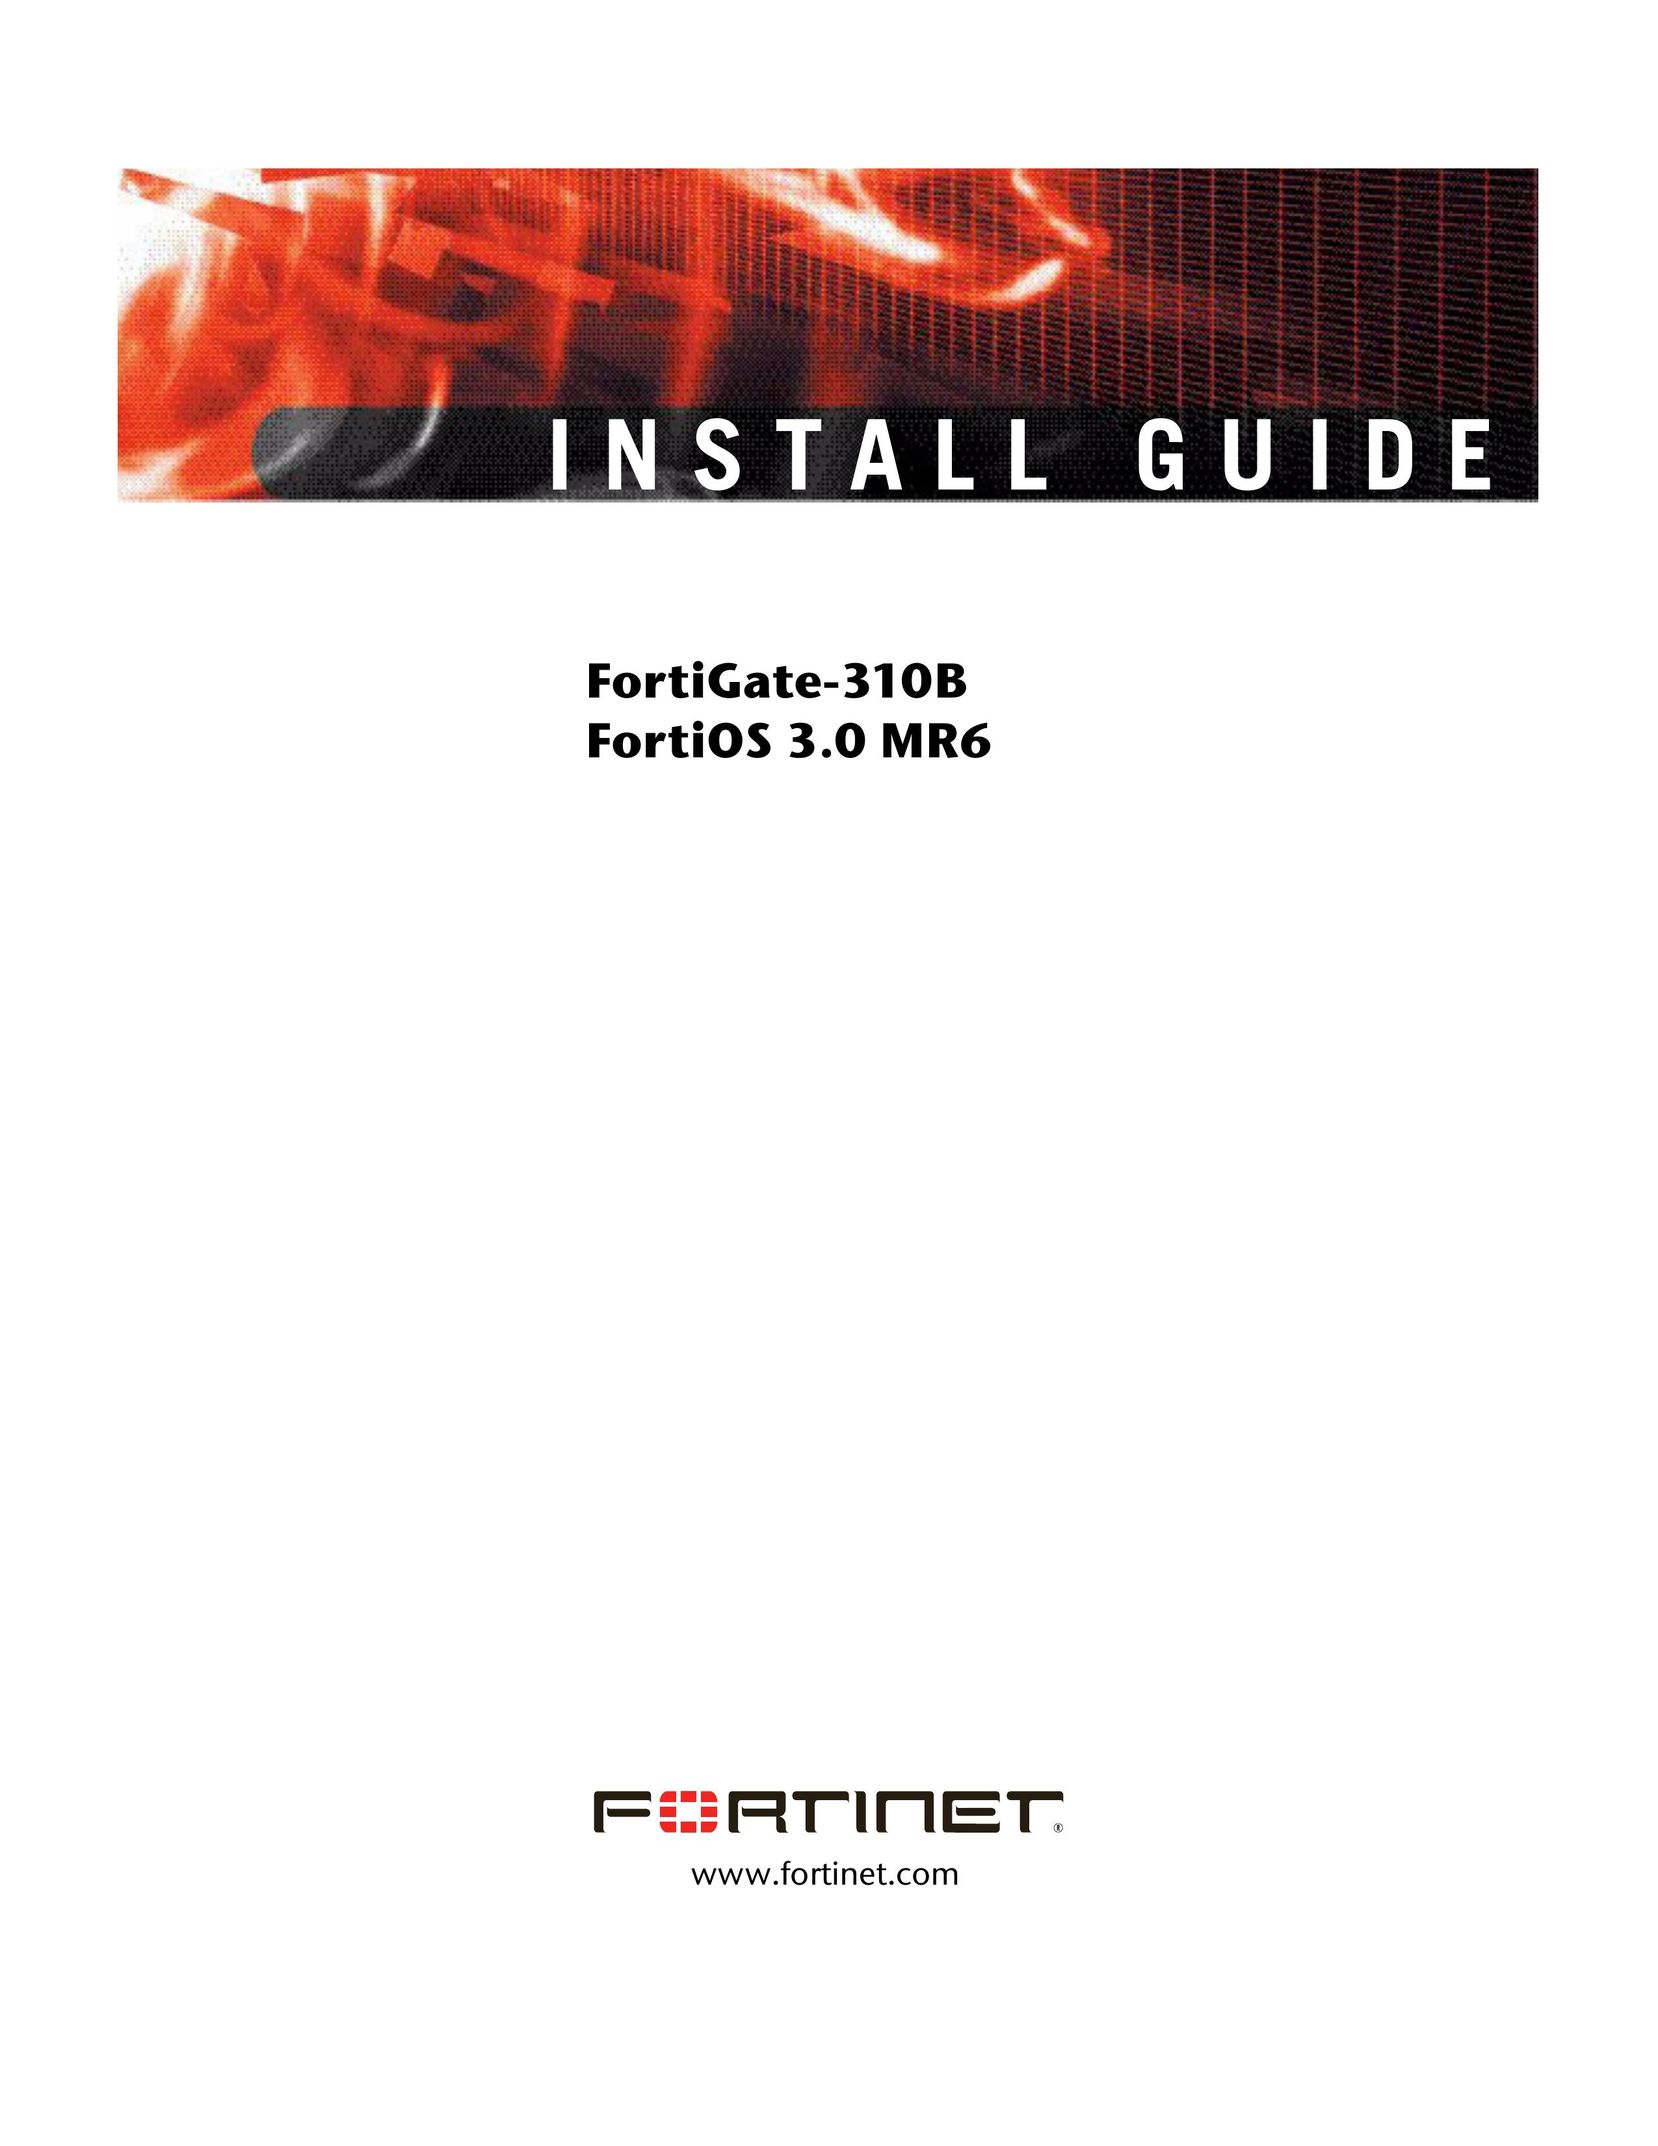 Fortinet 310B Network Card User Manual